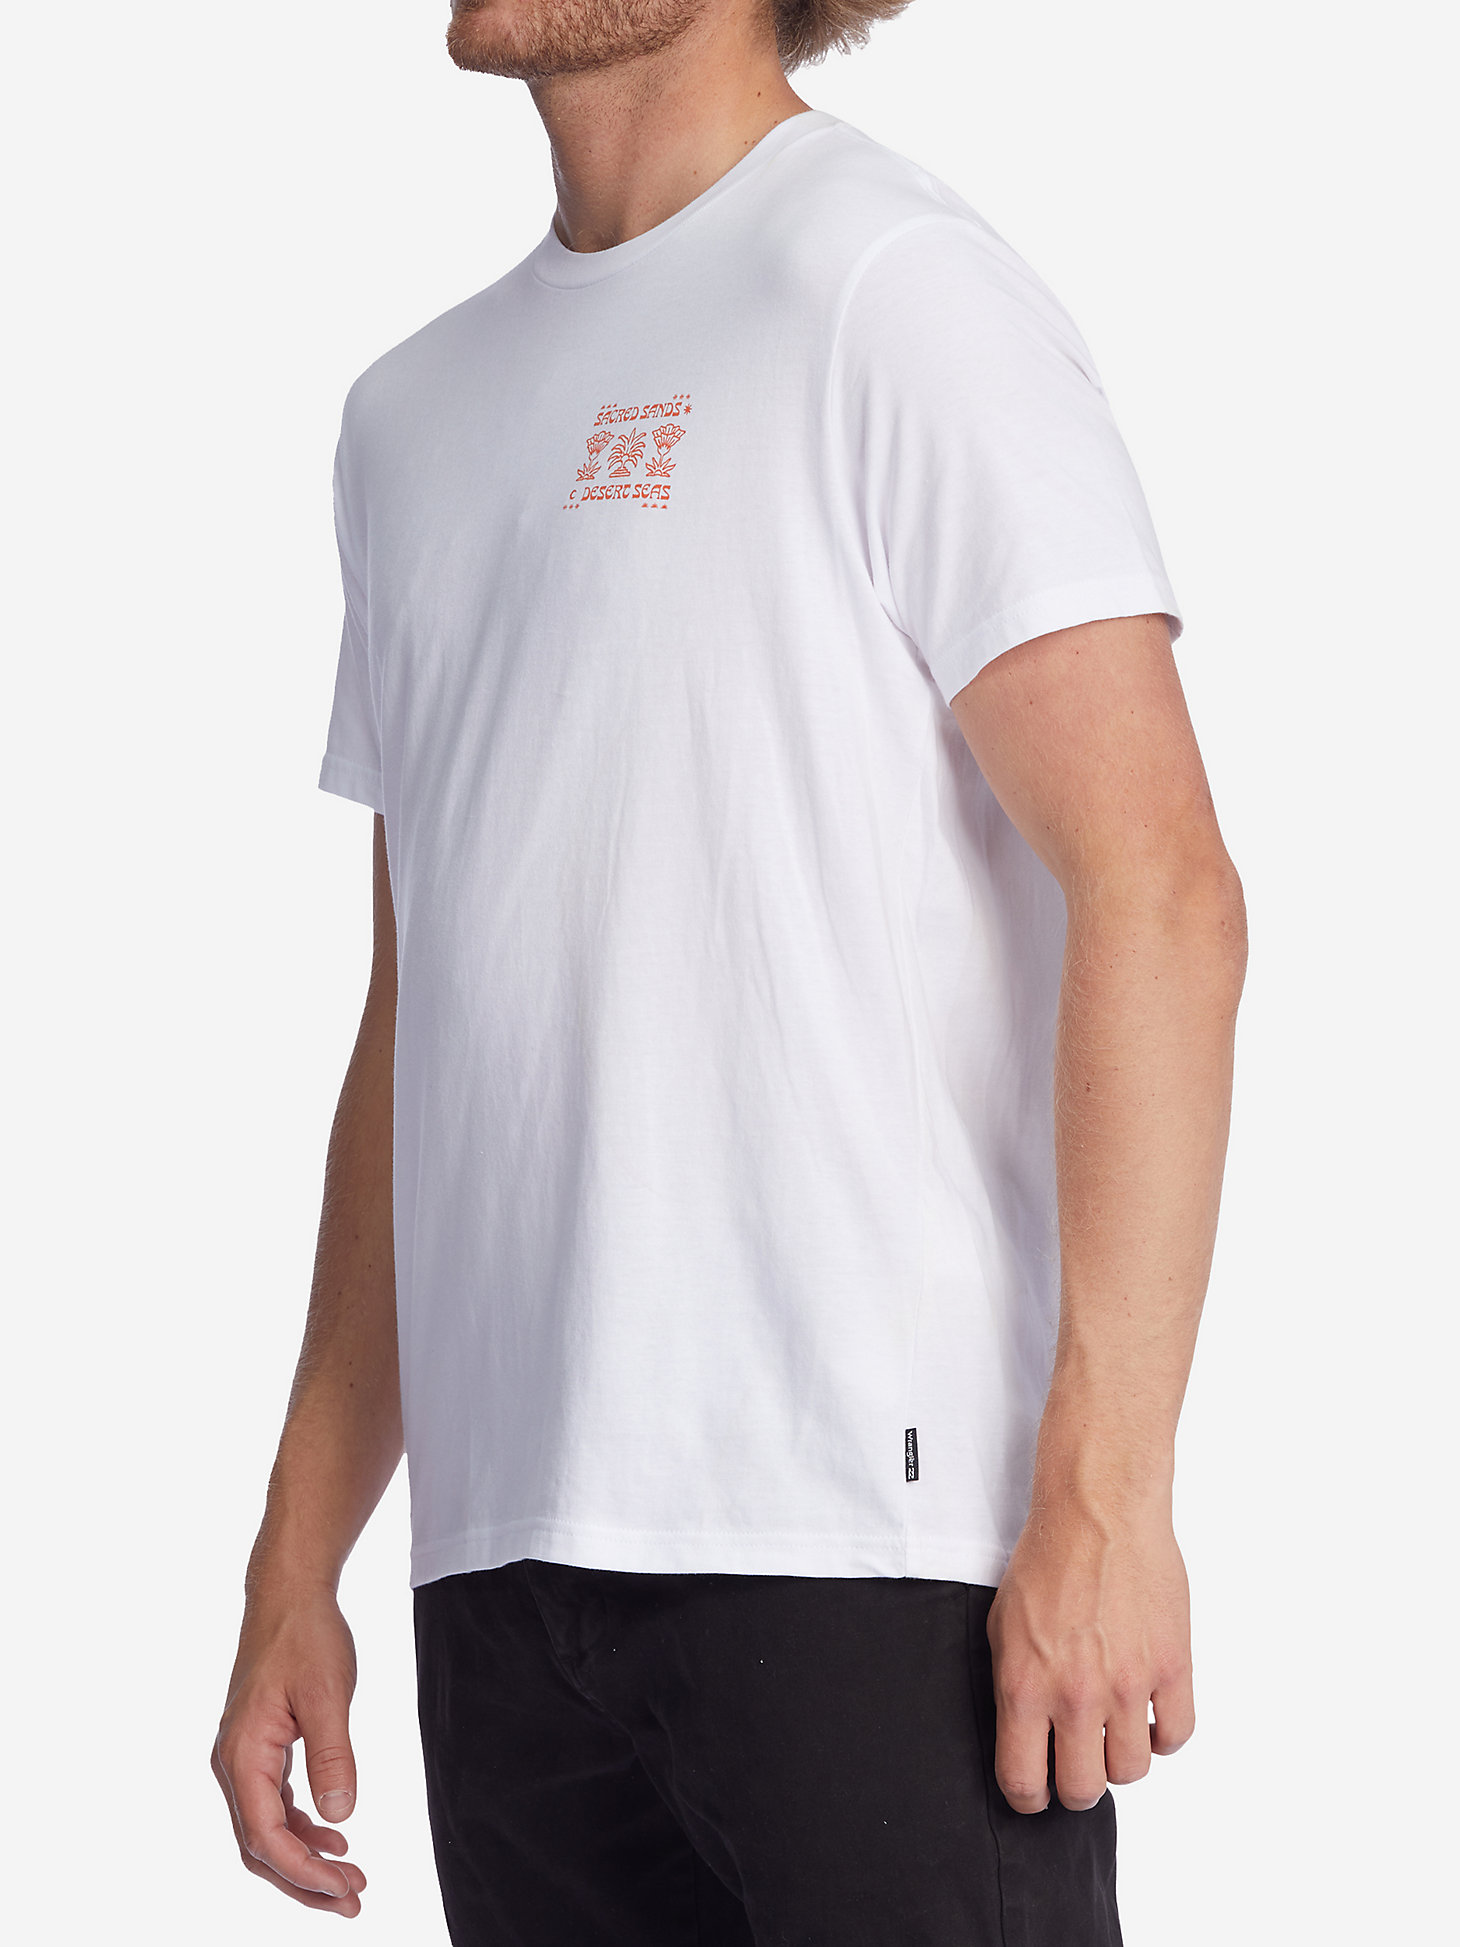 Billabong x Wrangler® Men's Rancher Horizon Graphic T-Shirt in White alternative view 5